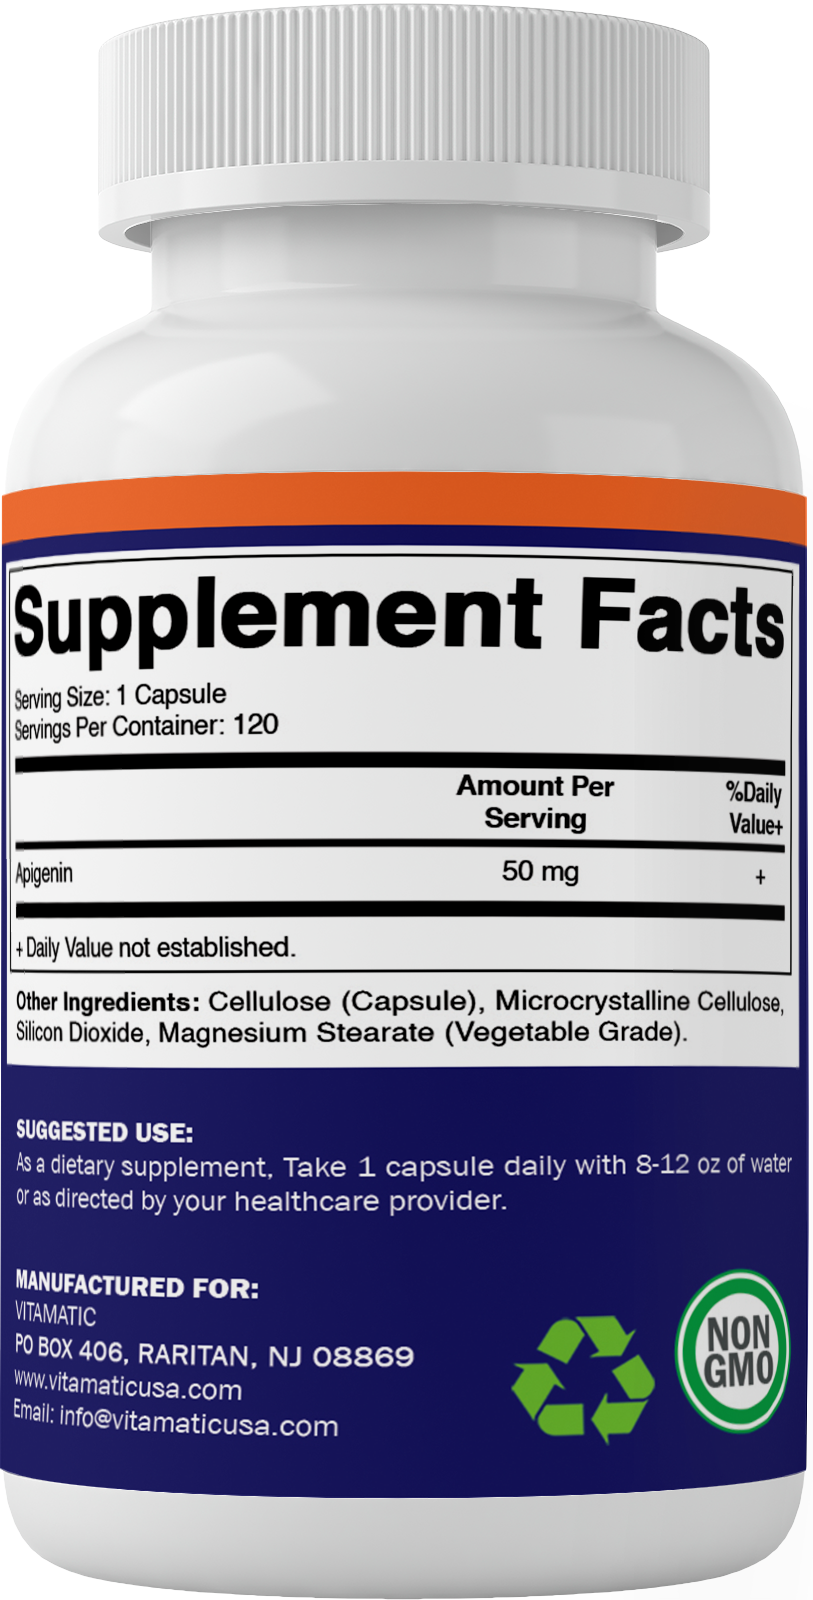 Apigenin 50 mg 120 Vegetarian Capsules